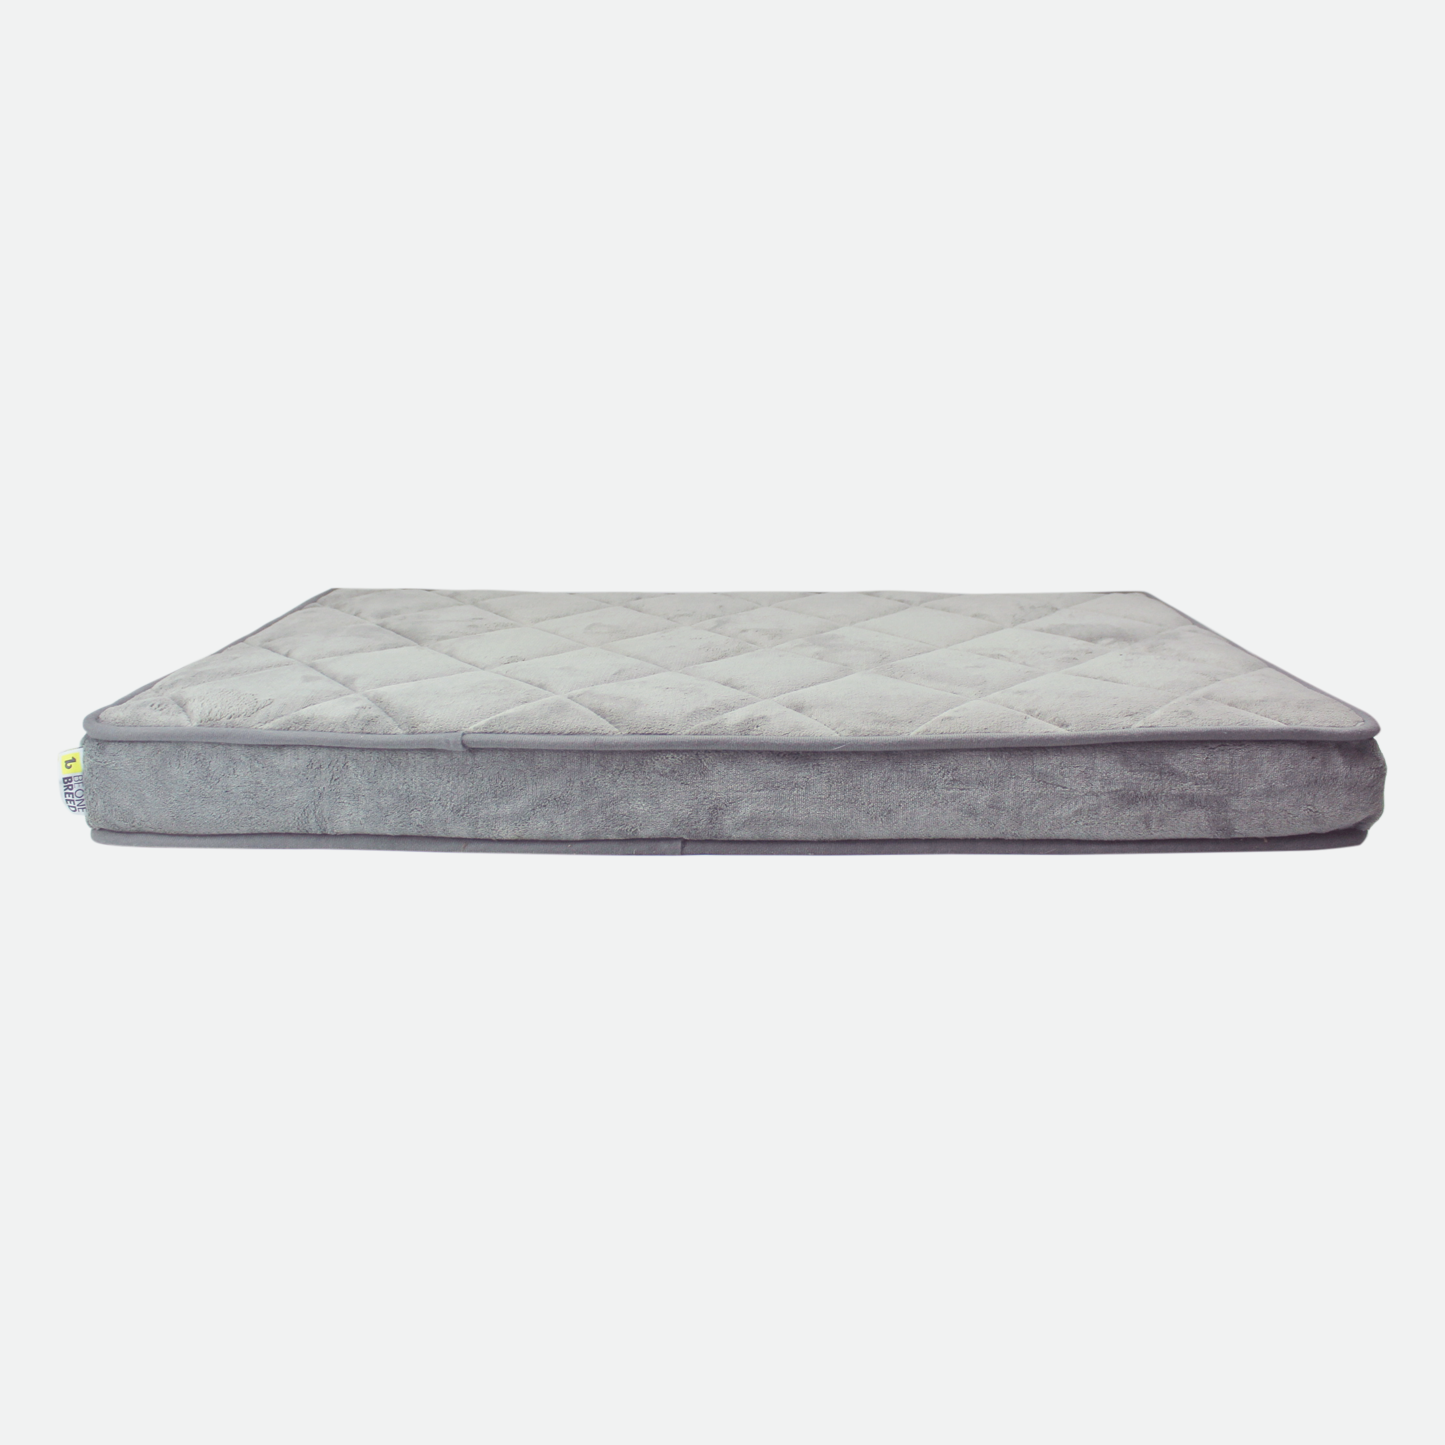 Orthopedic memory foam dog bed, gray